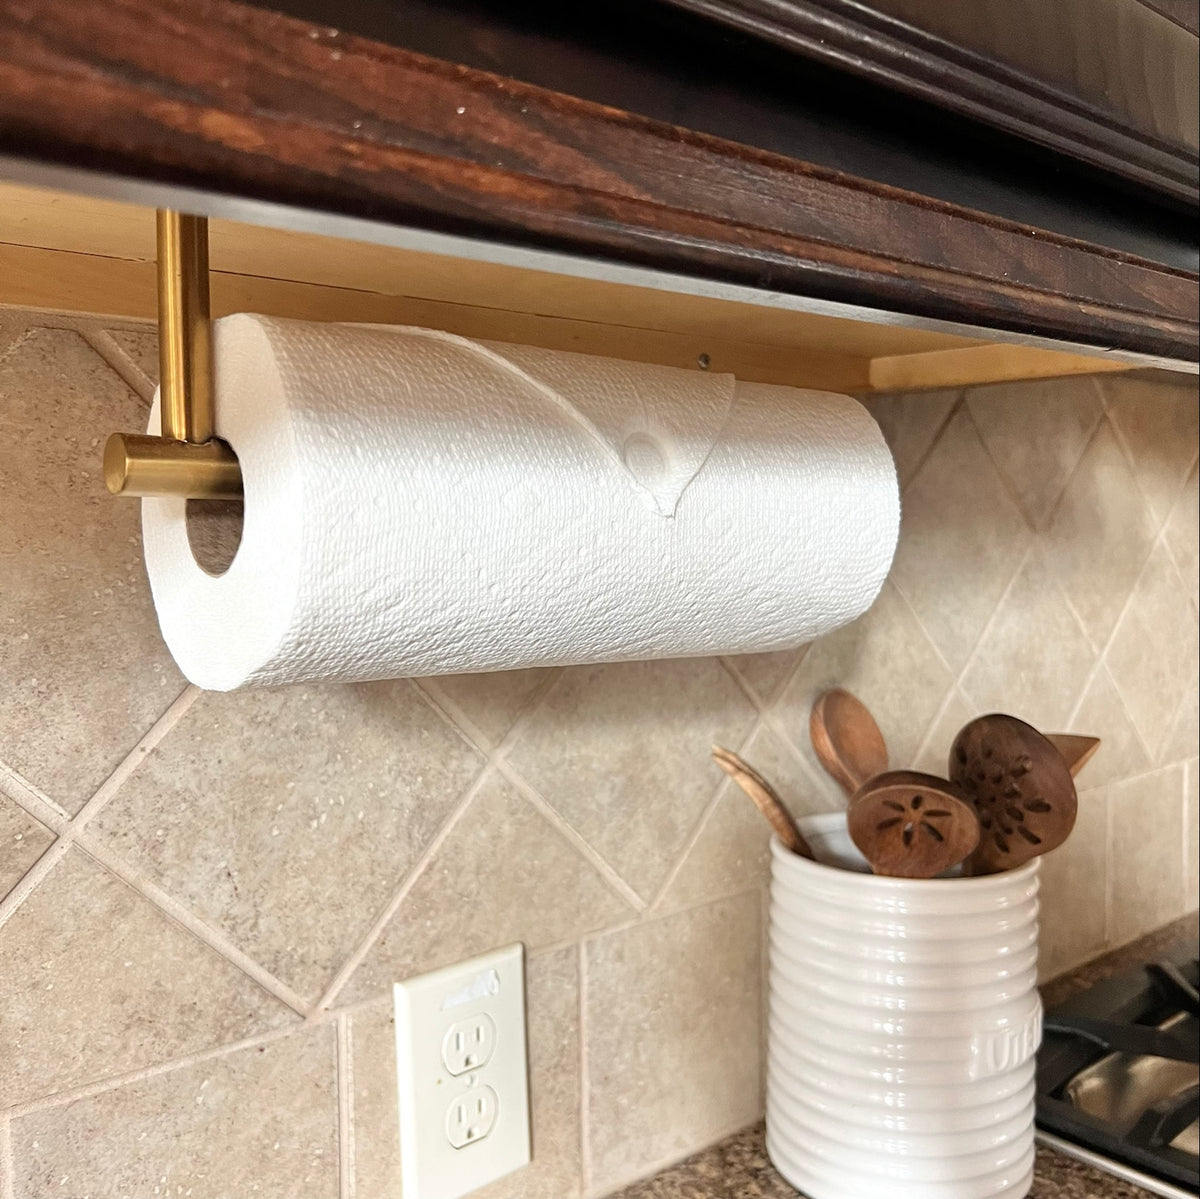 SimplyTear™ Paper Towel Holder